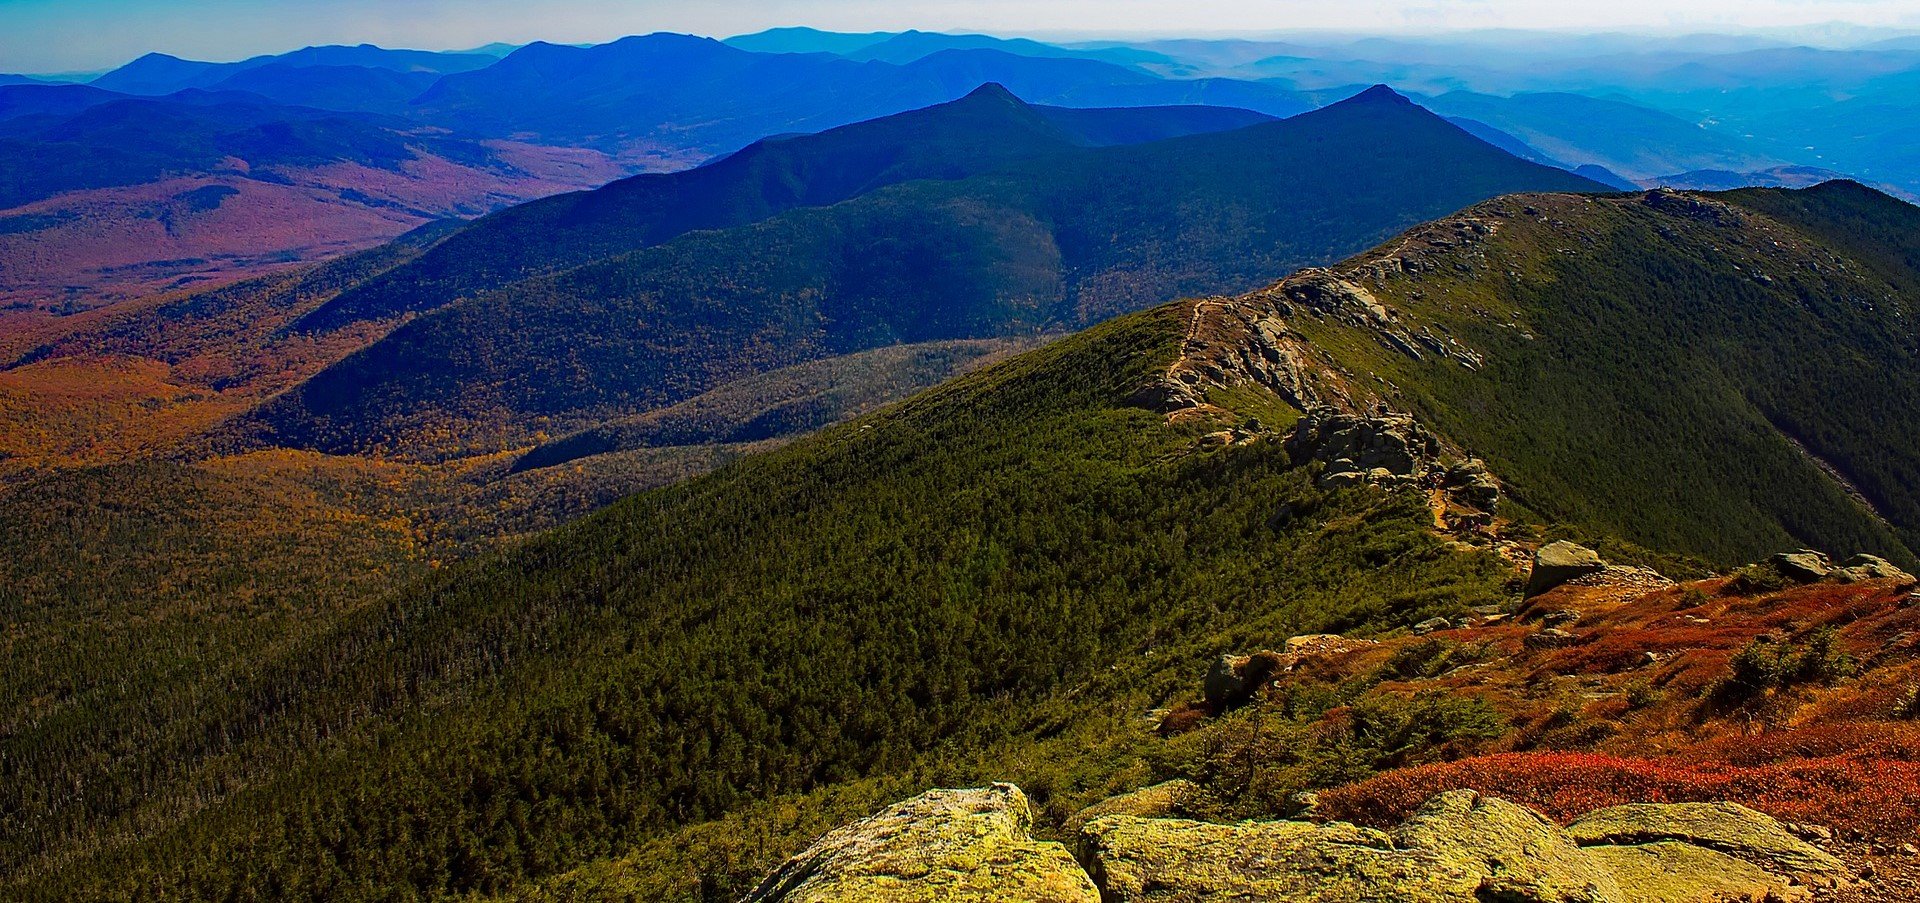 The White Mountains of New Hampshire - VeteranCarDonations.org